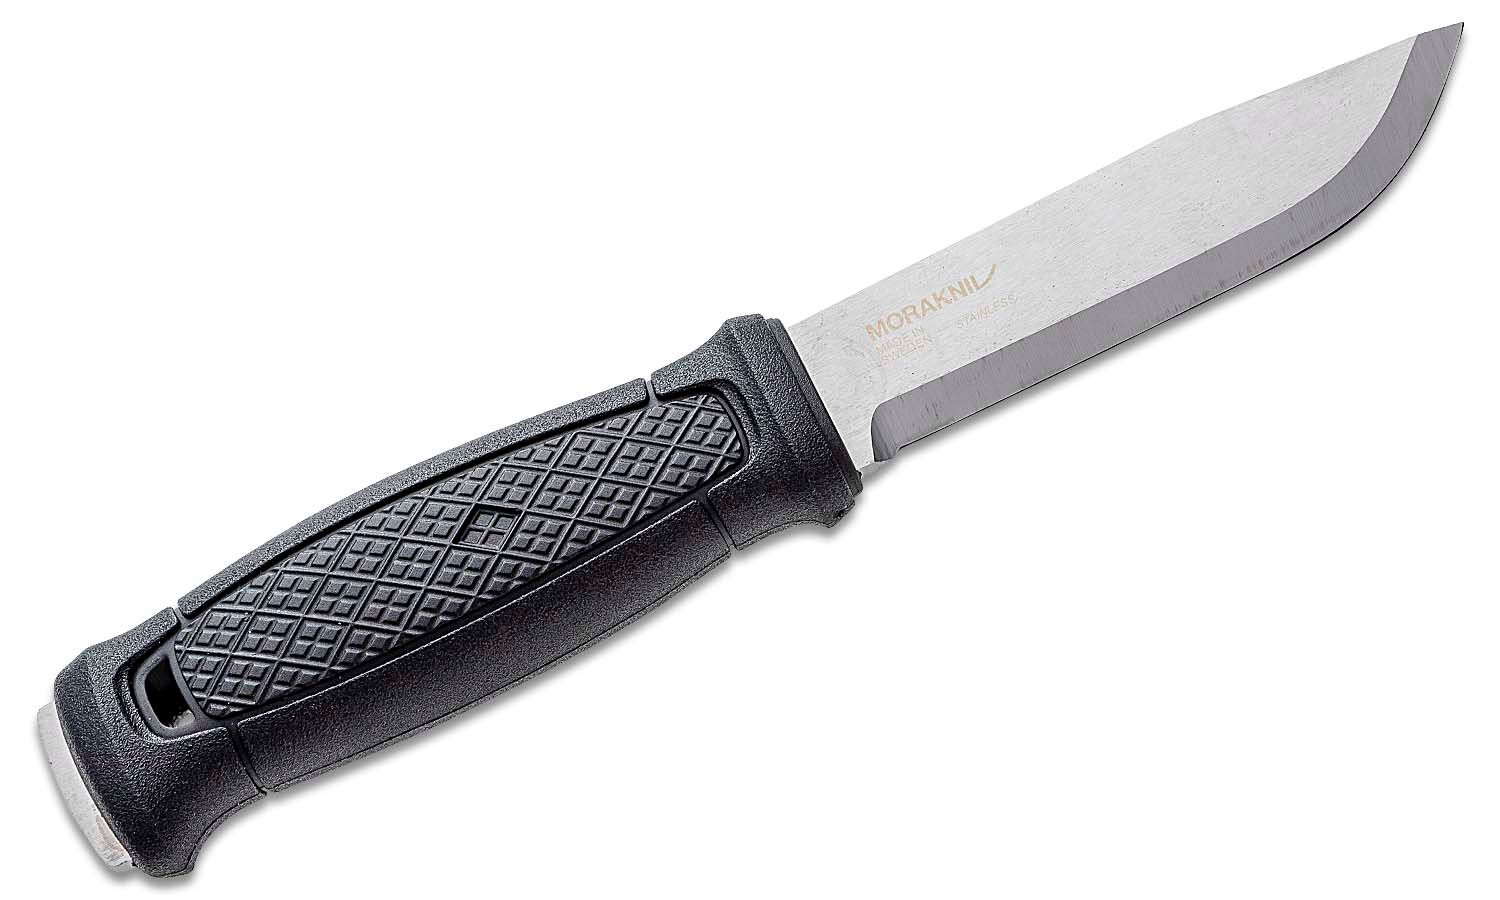 Morakniv Garberg Knife with Multi-Mount Sheath - 711430, Fixed